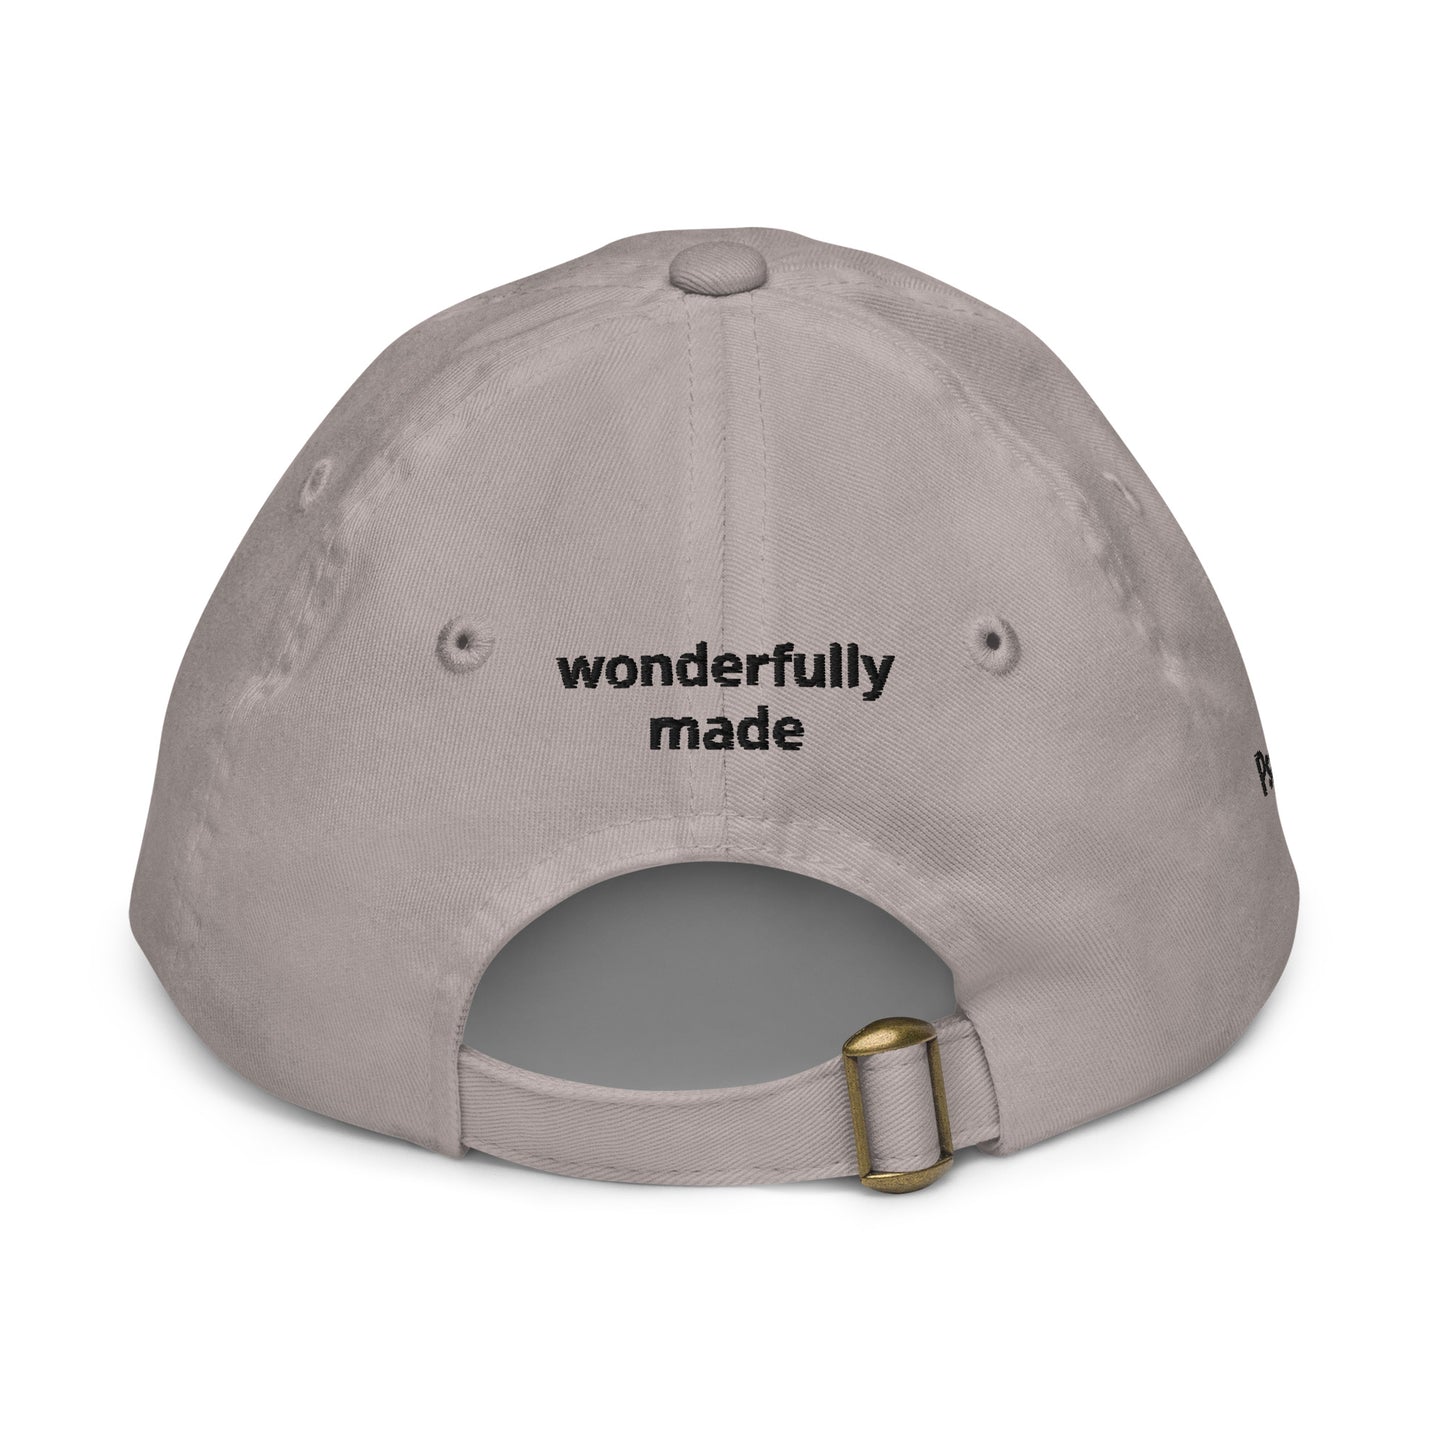 God Said "Wonderfully Made" Youth baseball cap